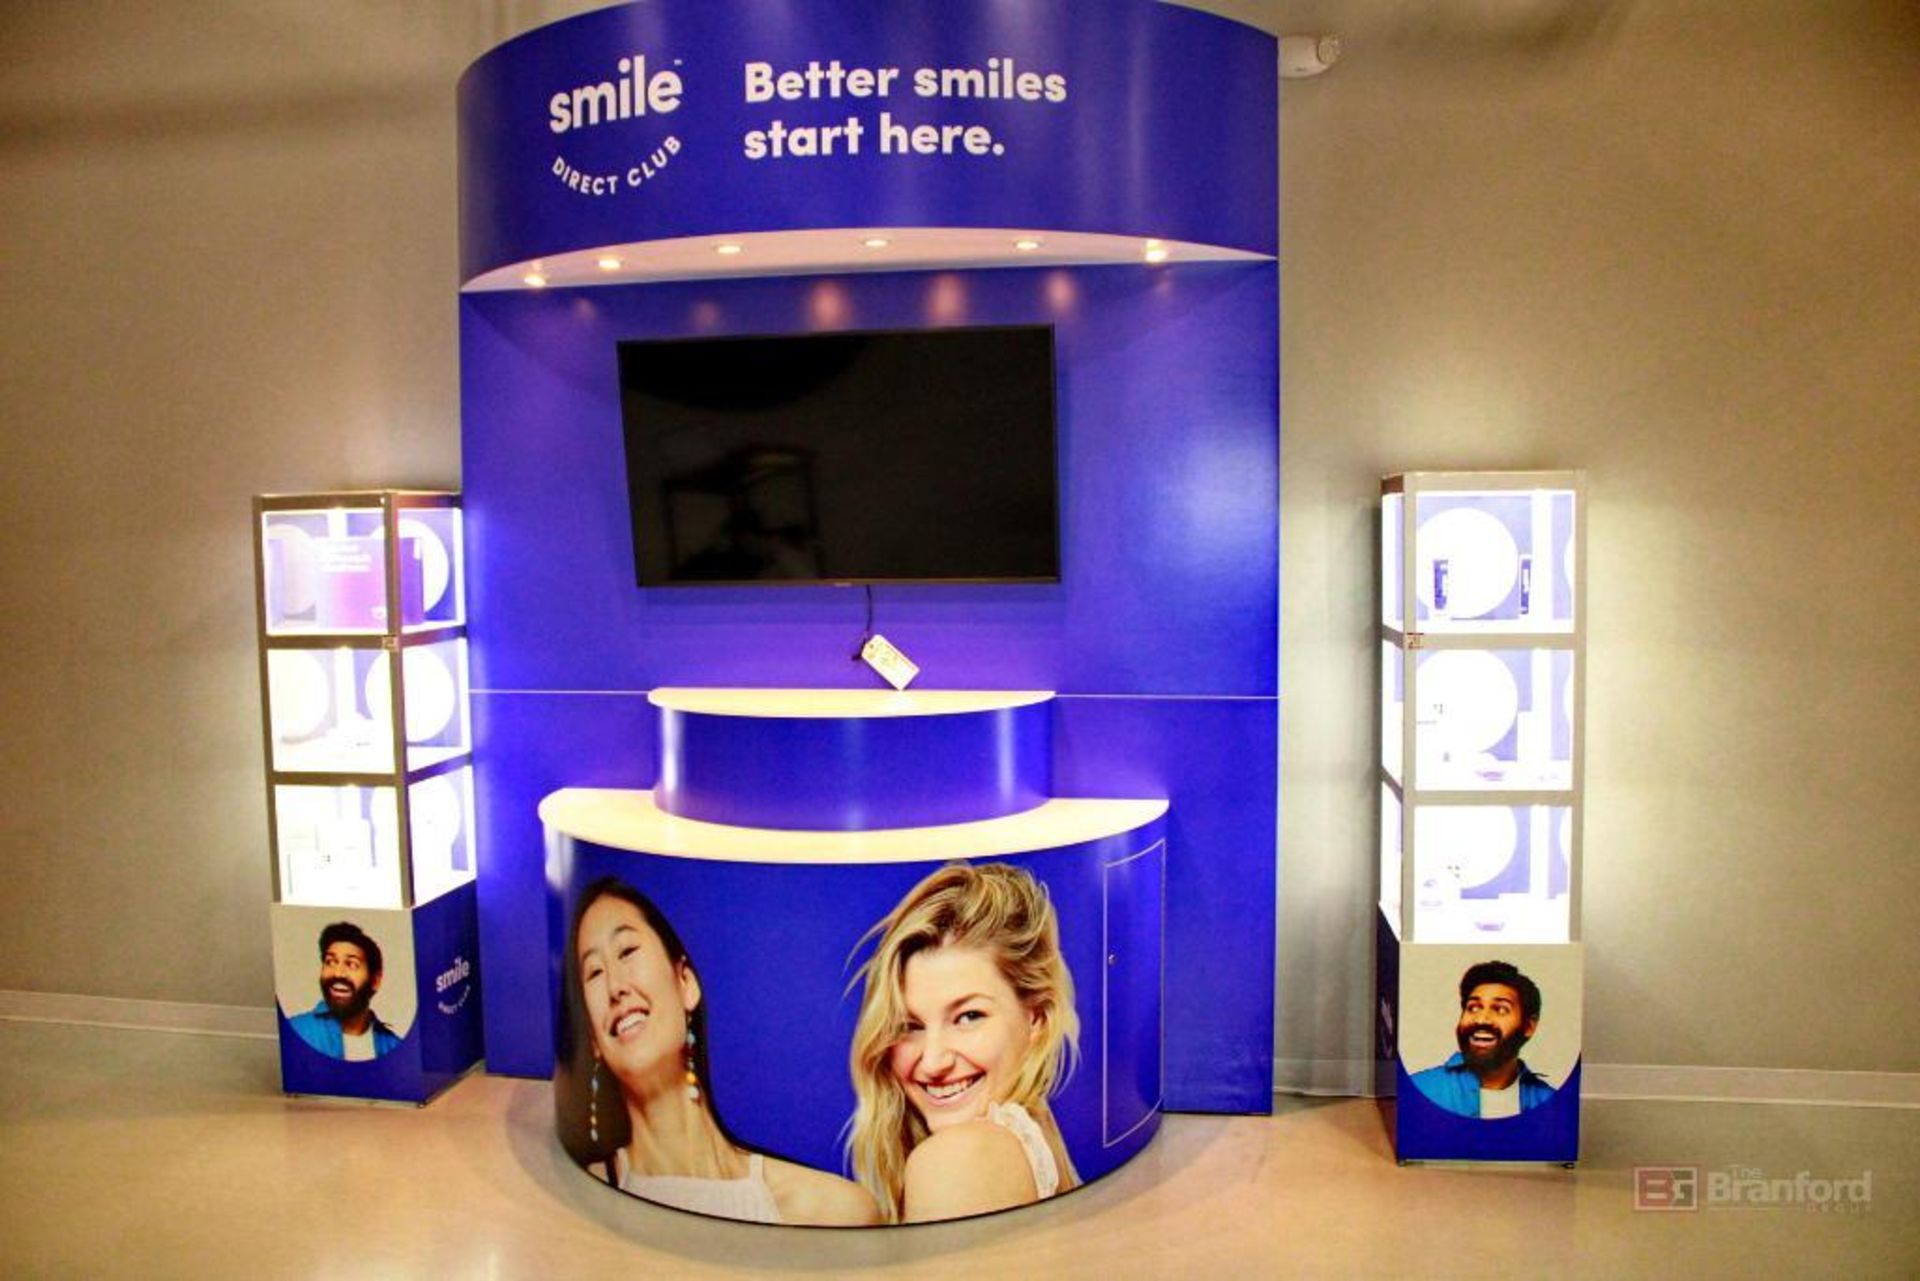 Smile Direct Displays & Samsung TV